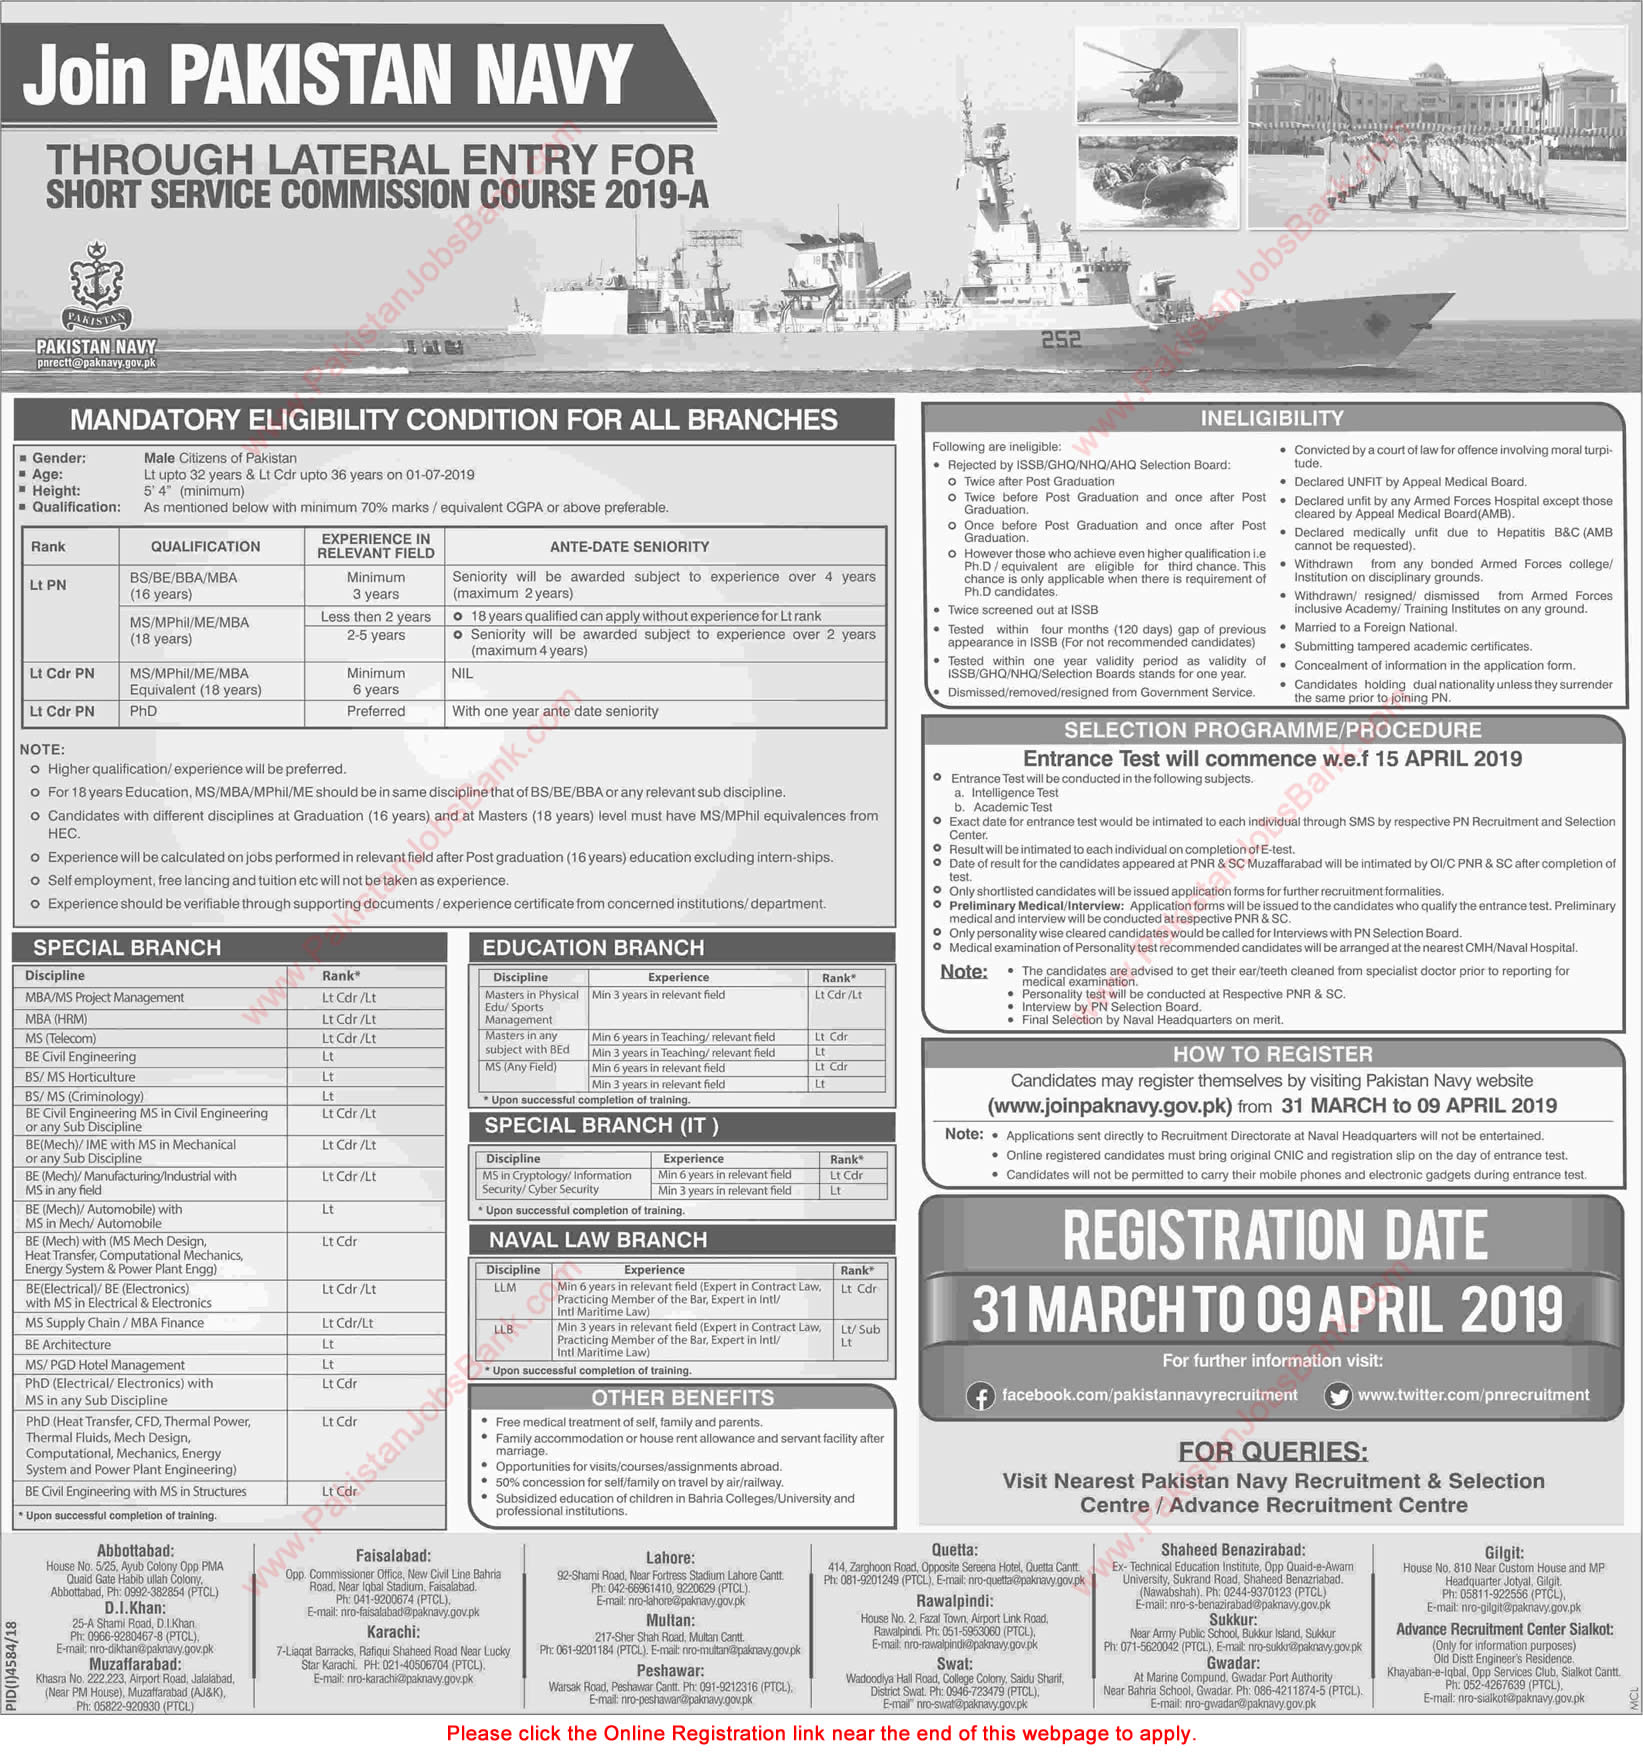 Join Pakistan Navy through Short Service Commission Course 2019-A Online Registration Latest